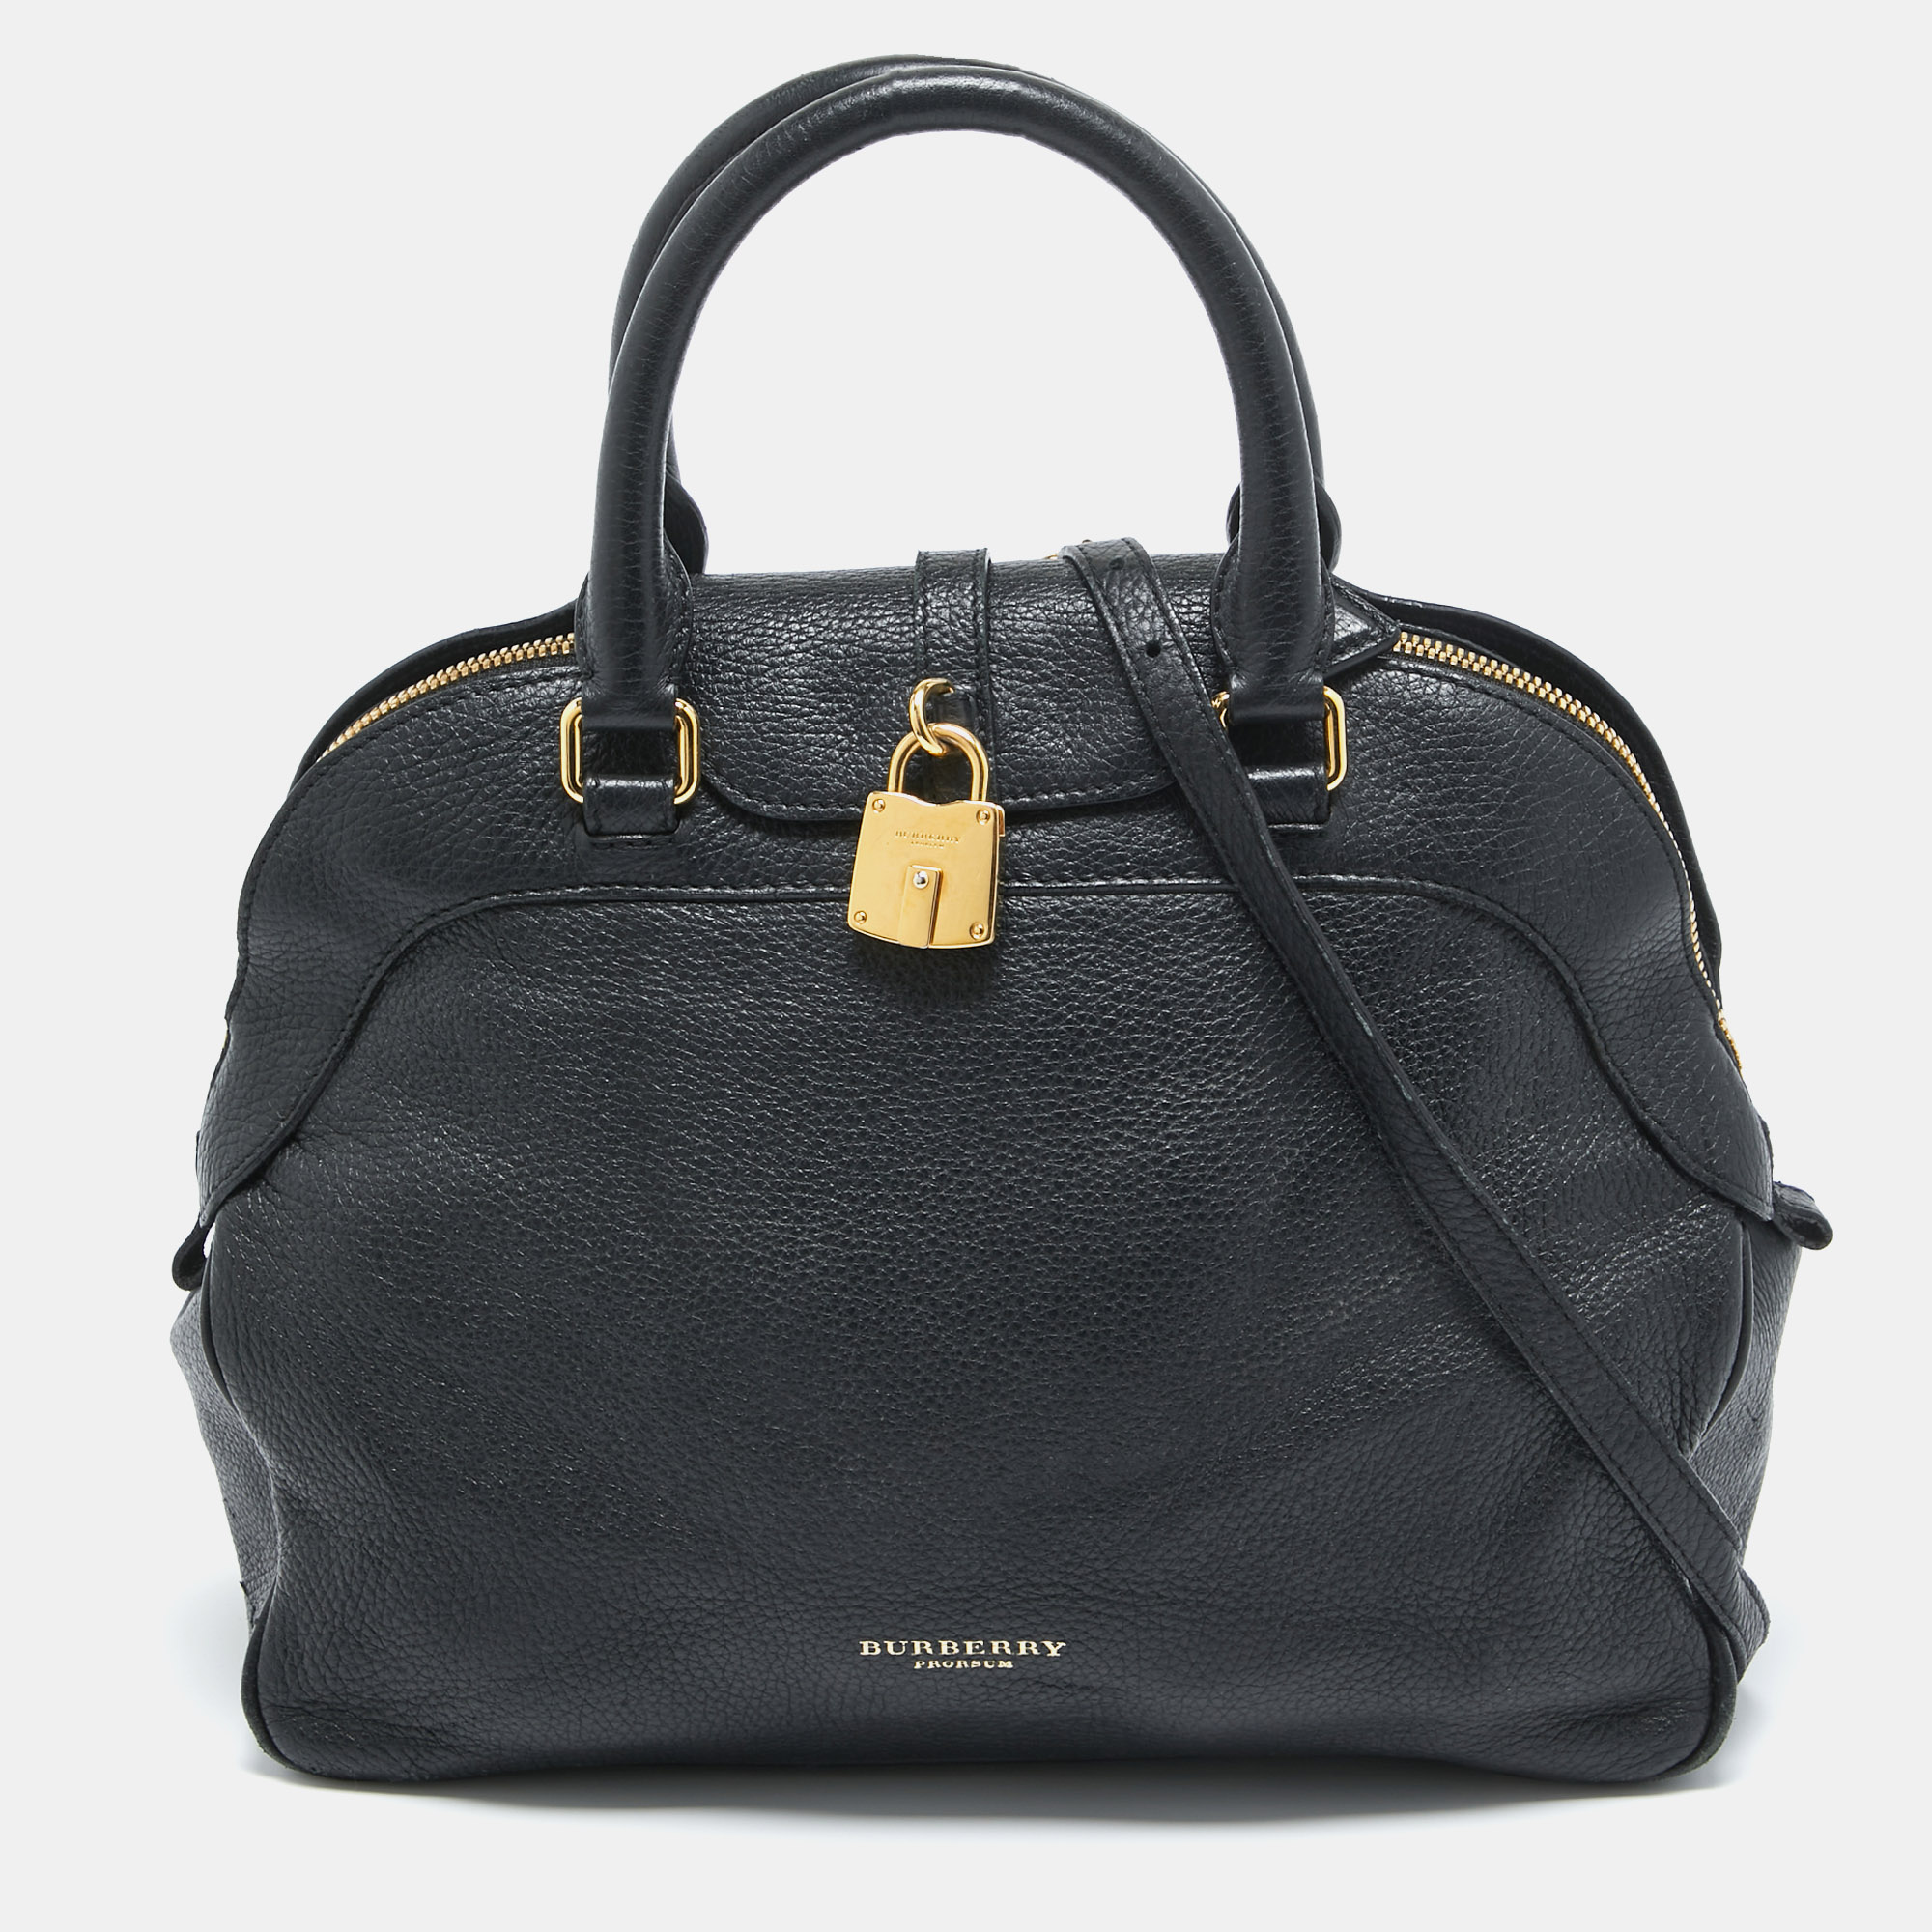 Burberry black leather padlock flap satchel